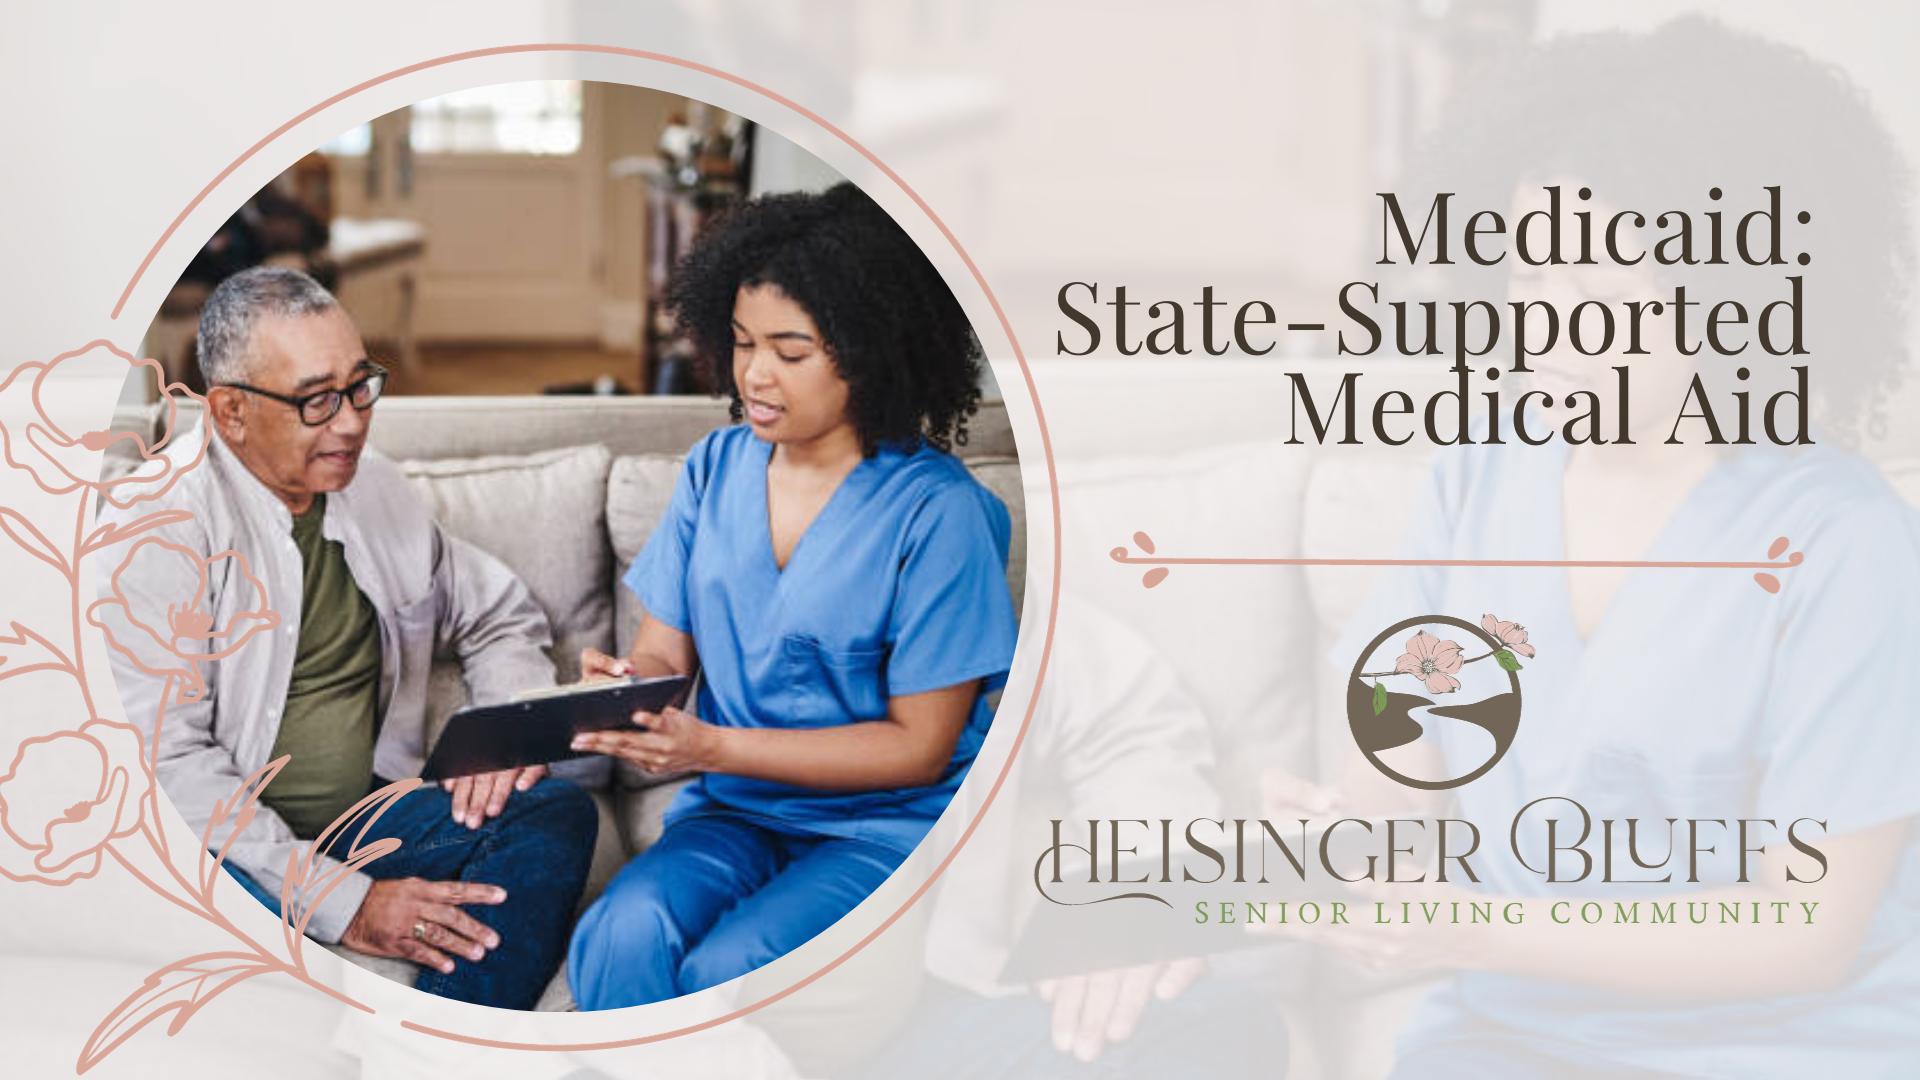 Heisinger Bluffs is adept at navigating Missouri’s Medicaid framework